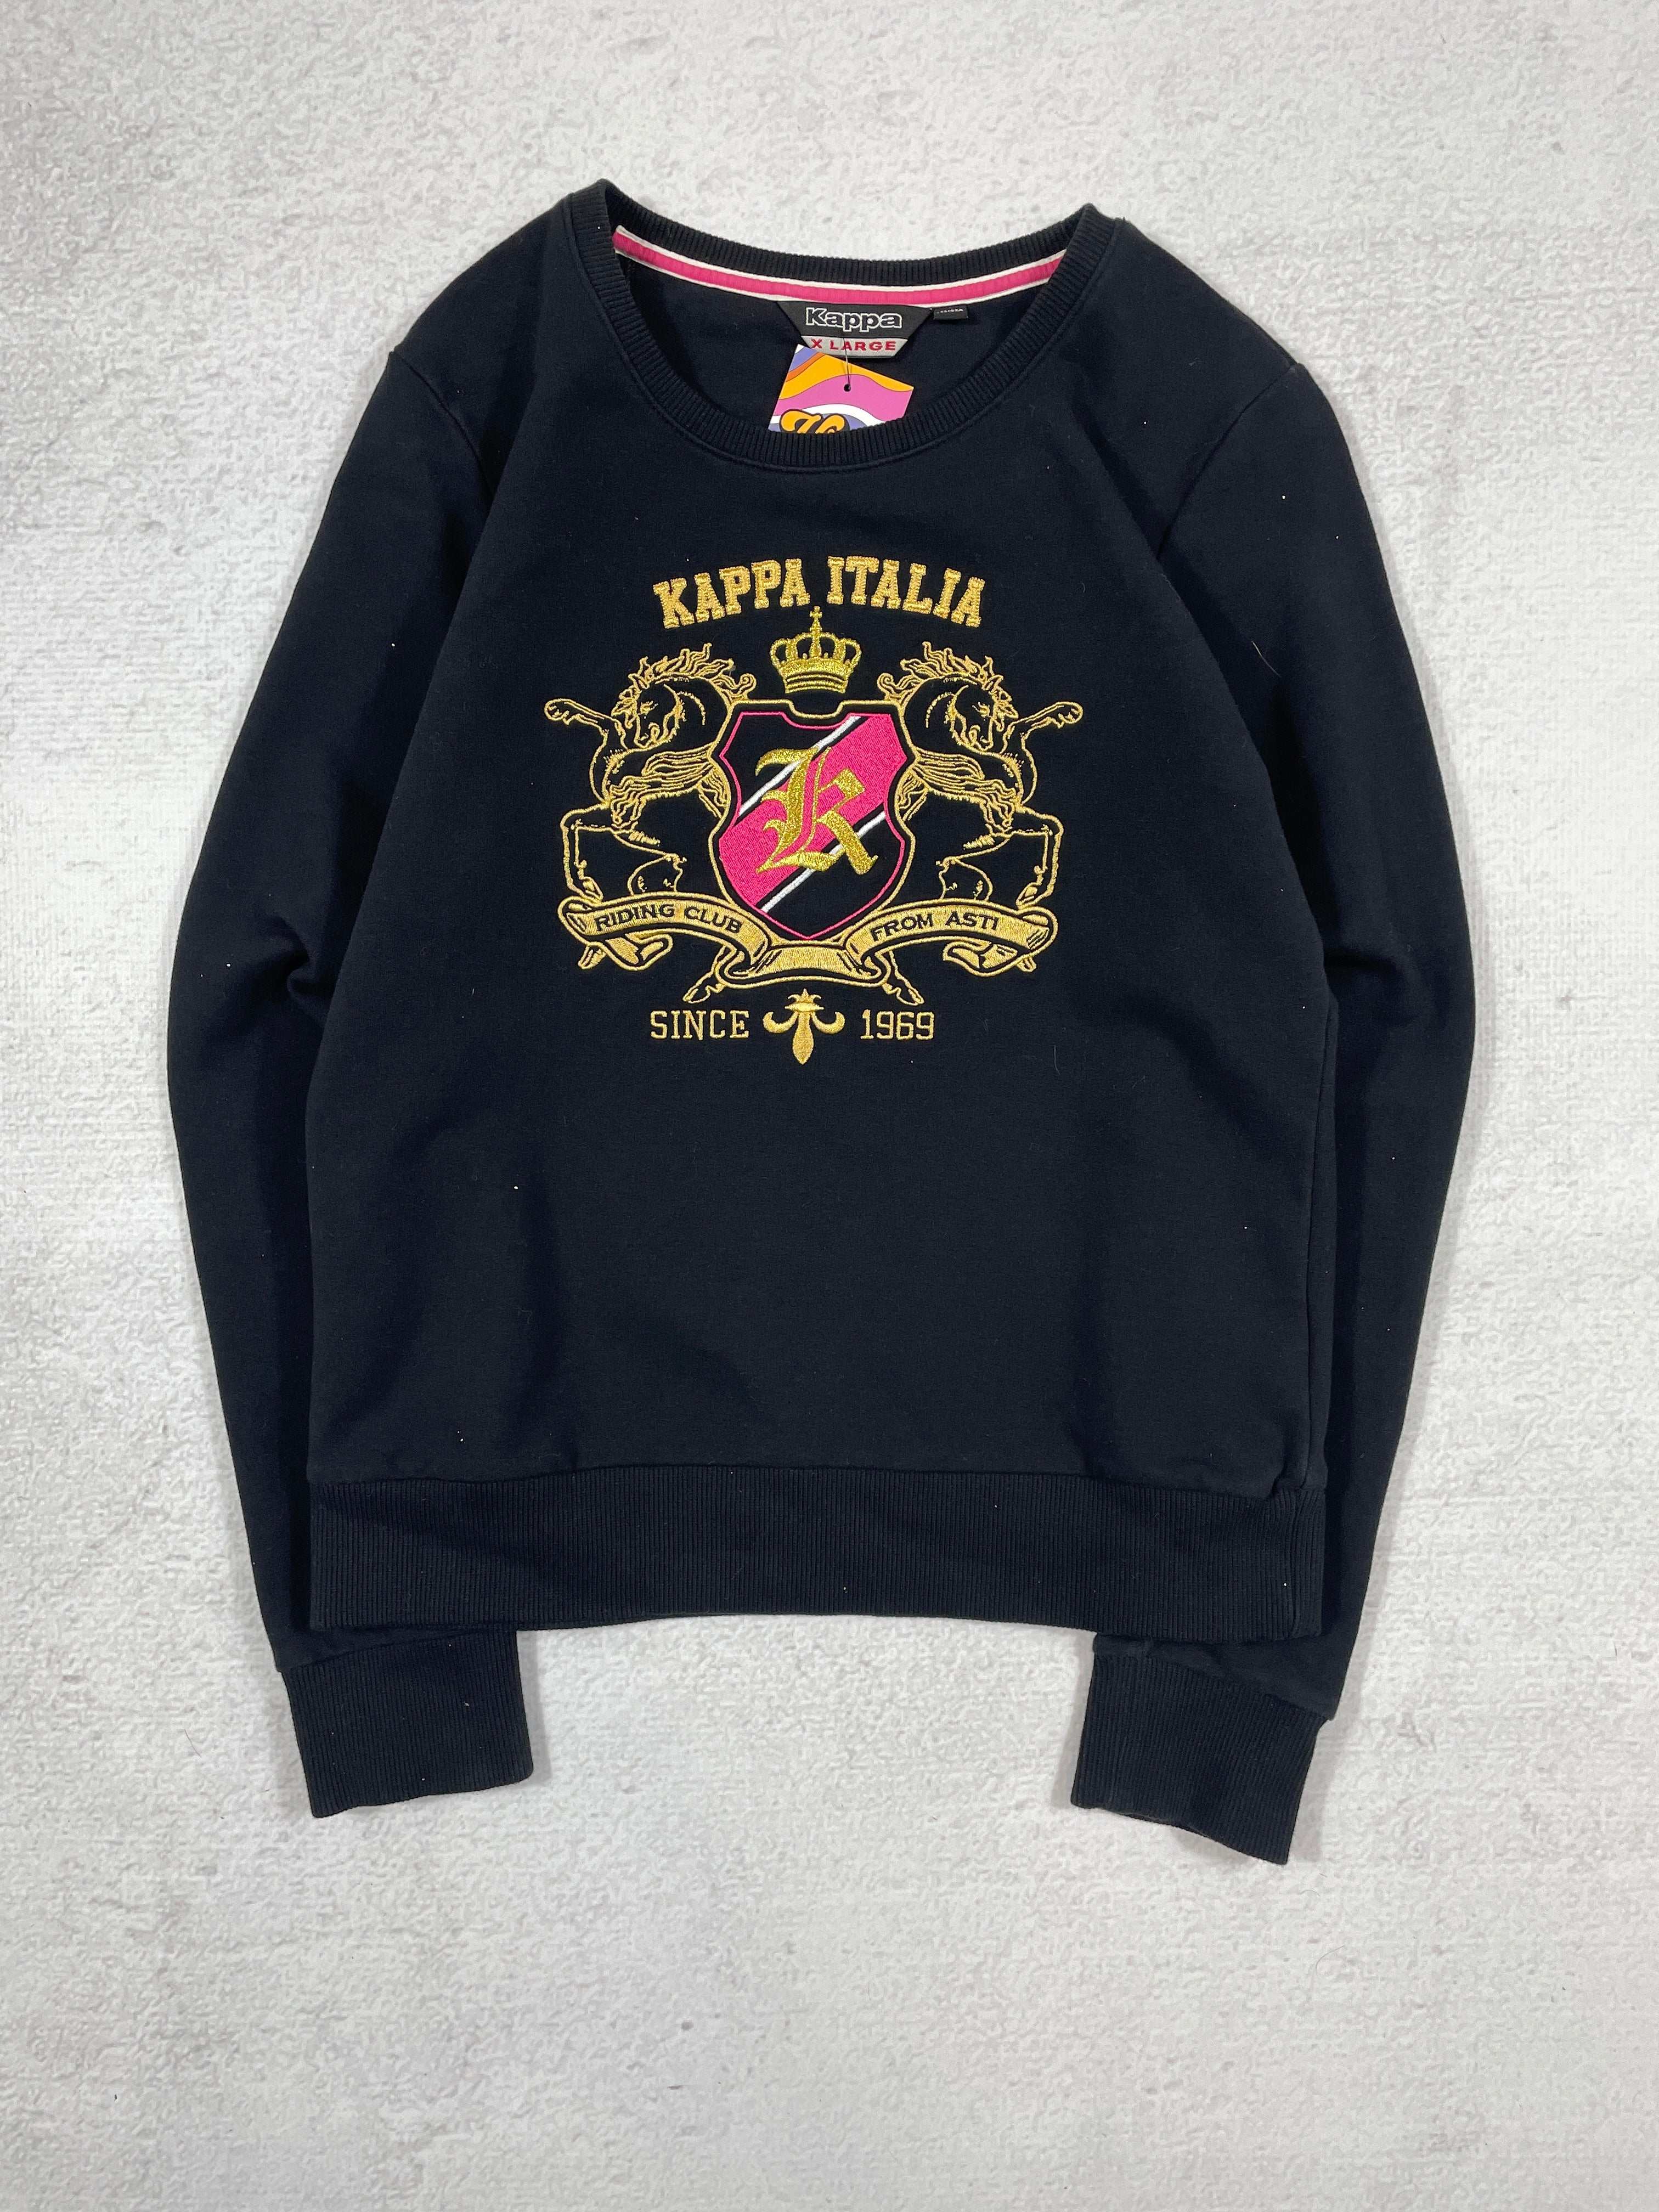 Vintage Kappa Italia Crewneck Sweatshirt - Women's Small